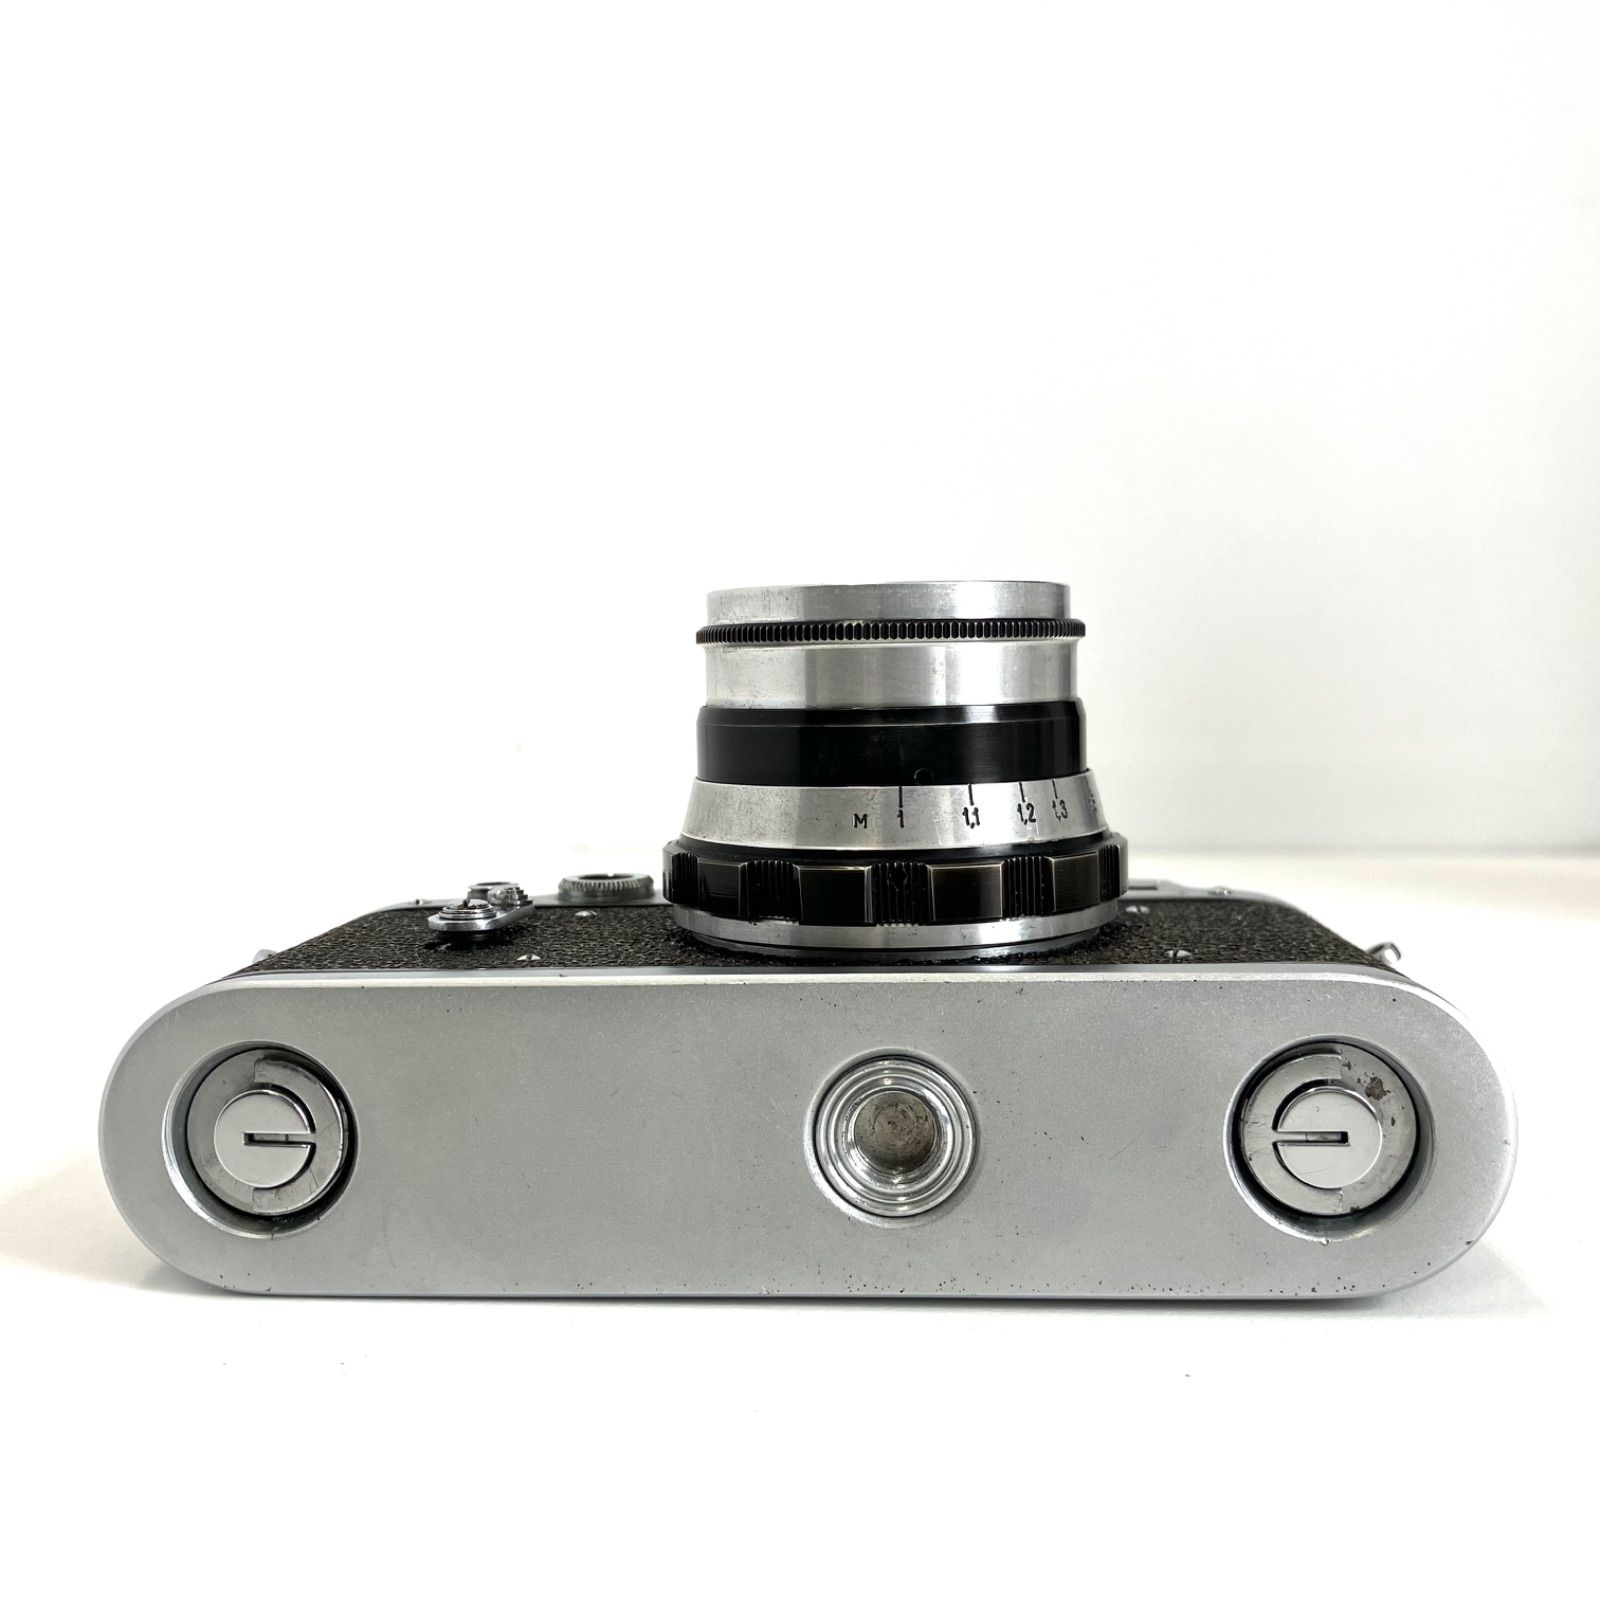 627924】 FED-2 ライカコピー レンズセット N-61 52mm f2.8 美品 - メルカリ